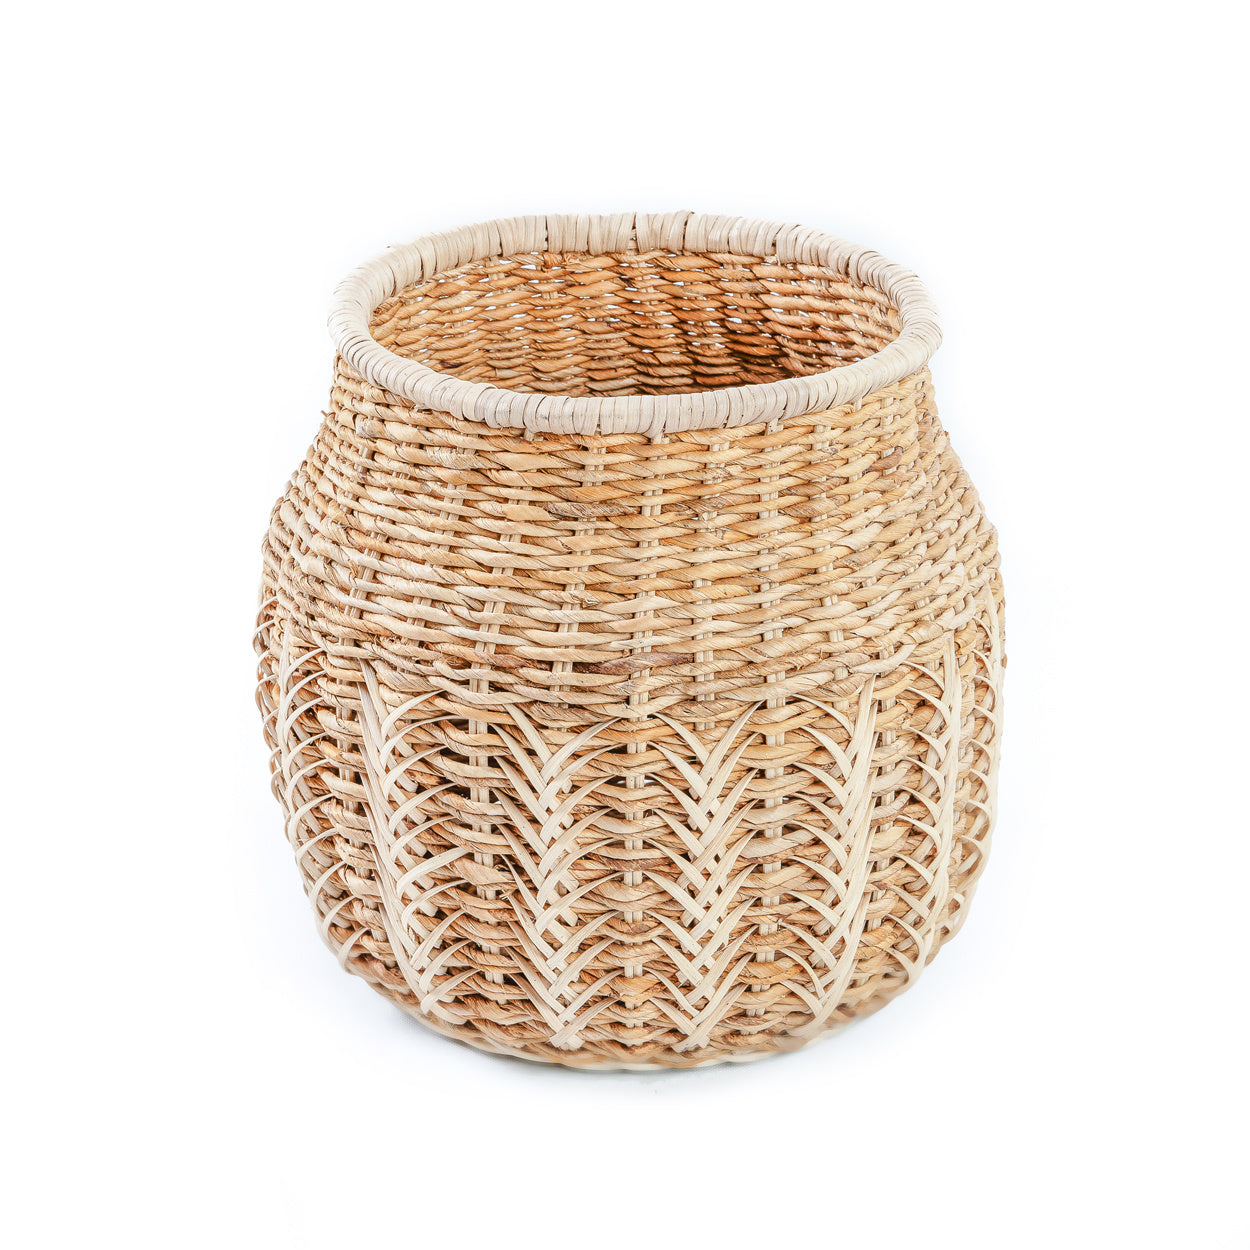 THE LUZIRU Basket - Natural M